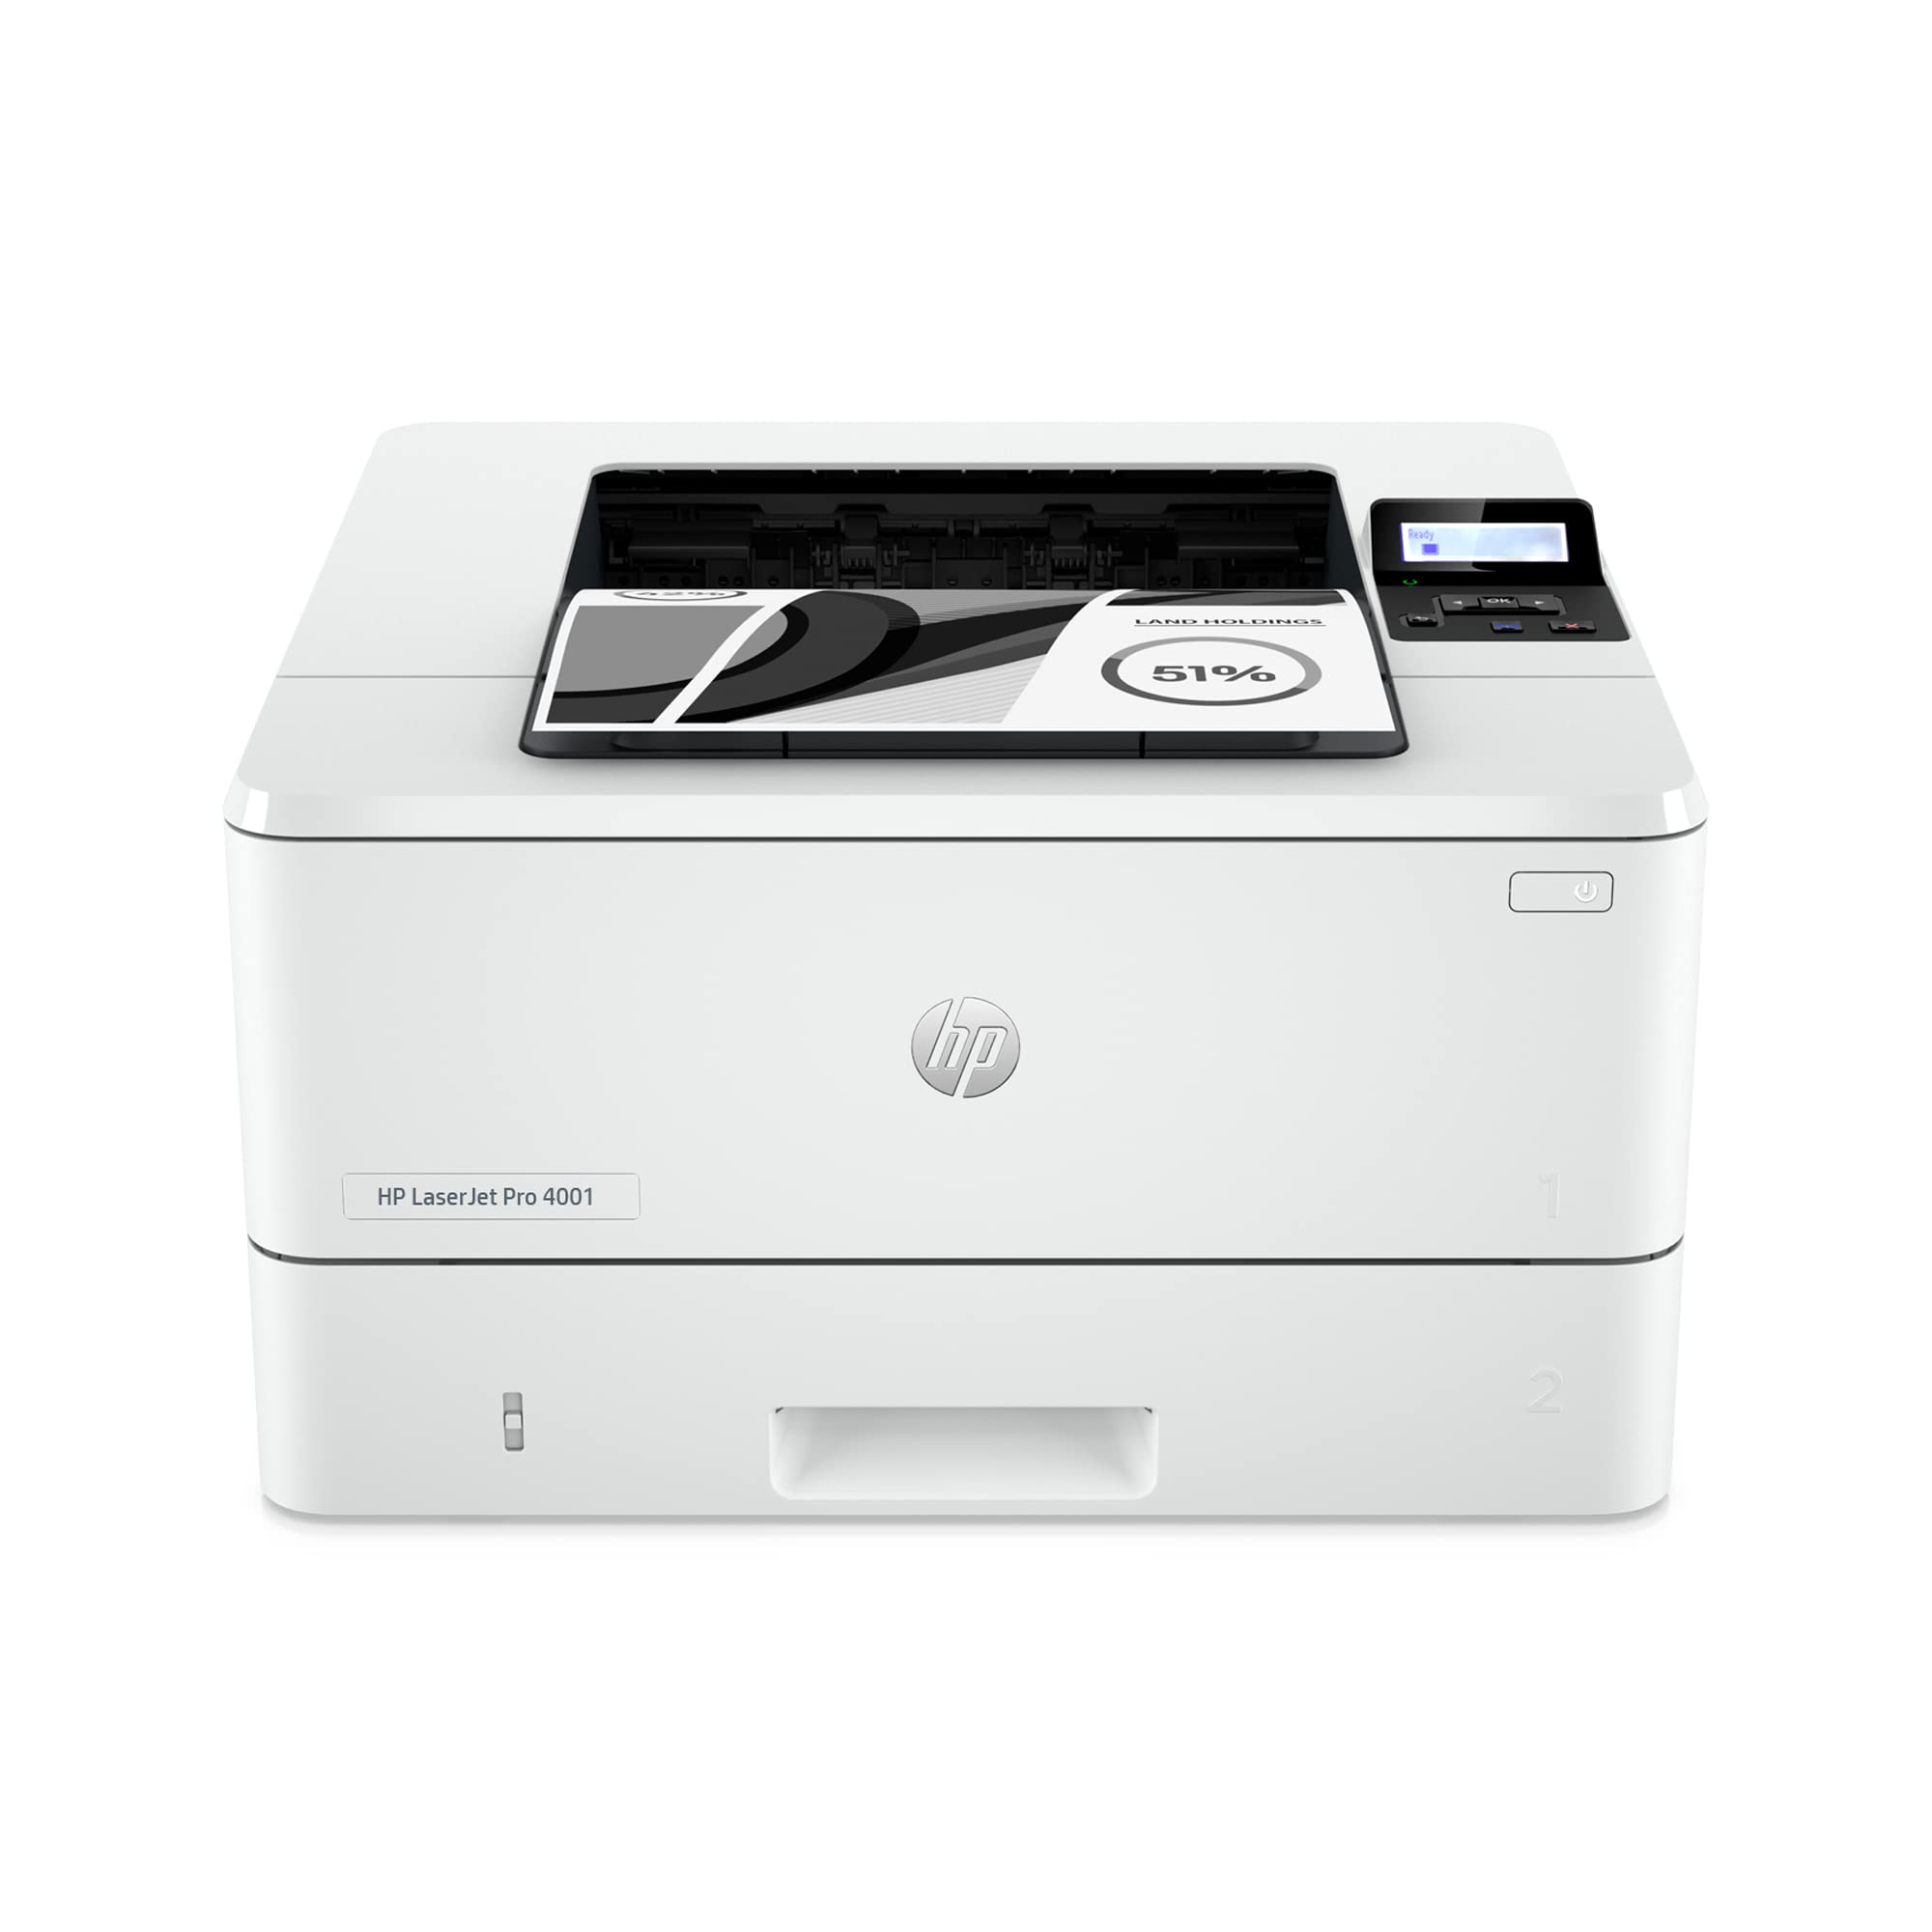 HP LaserJet Pro 4001dw impressora sem fio preto e branc...